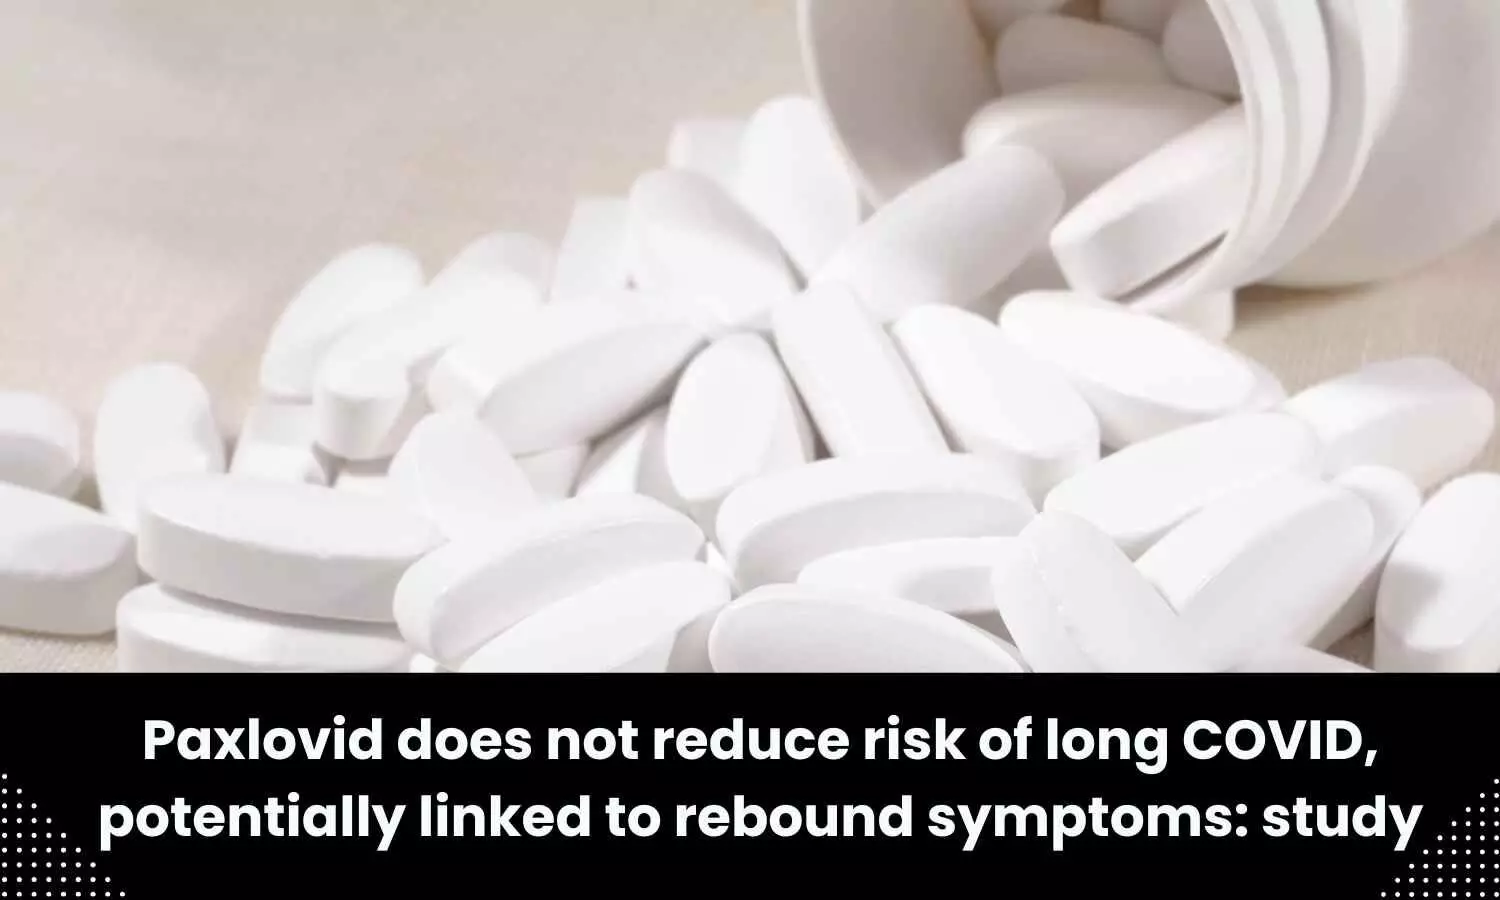 Paxlovid does not reduce risk of long COVID: Study